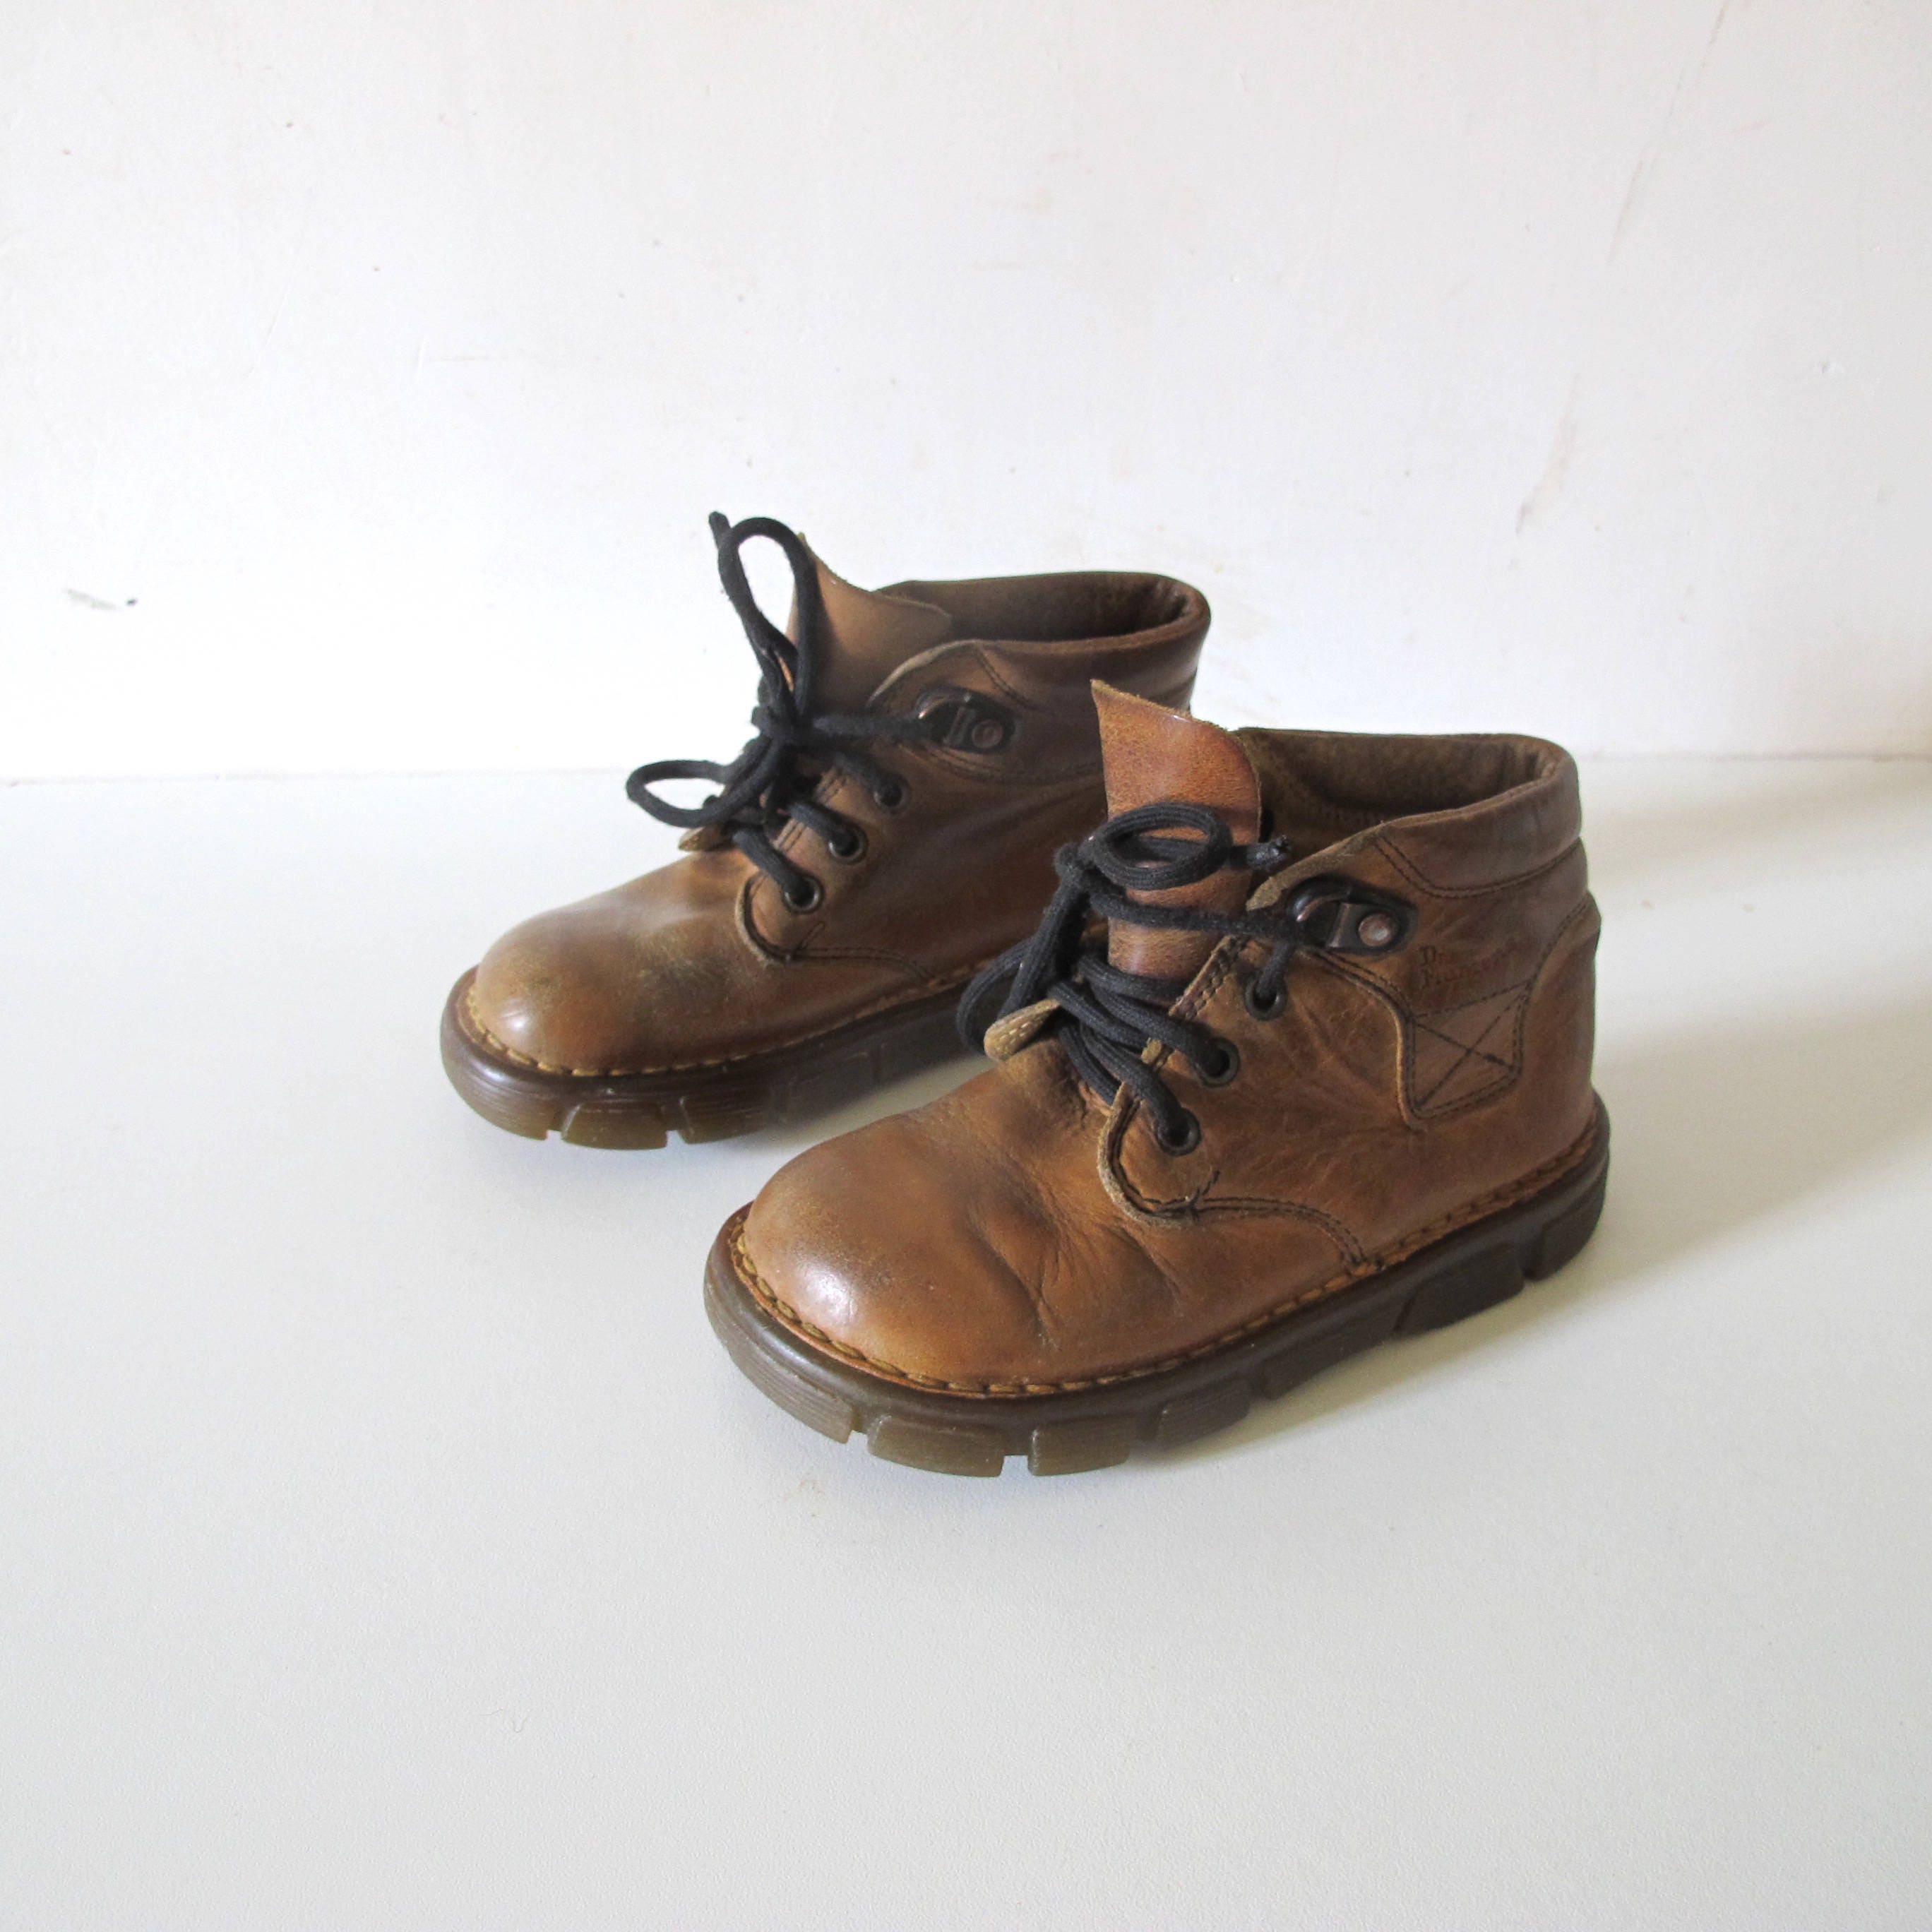 Betuttelen Verplaatsing acre Vintage Kids Dr Martens Leather Child Ankle Hiking Boots - Etsy